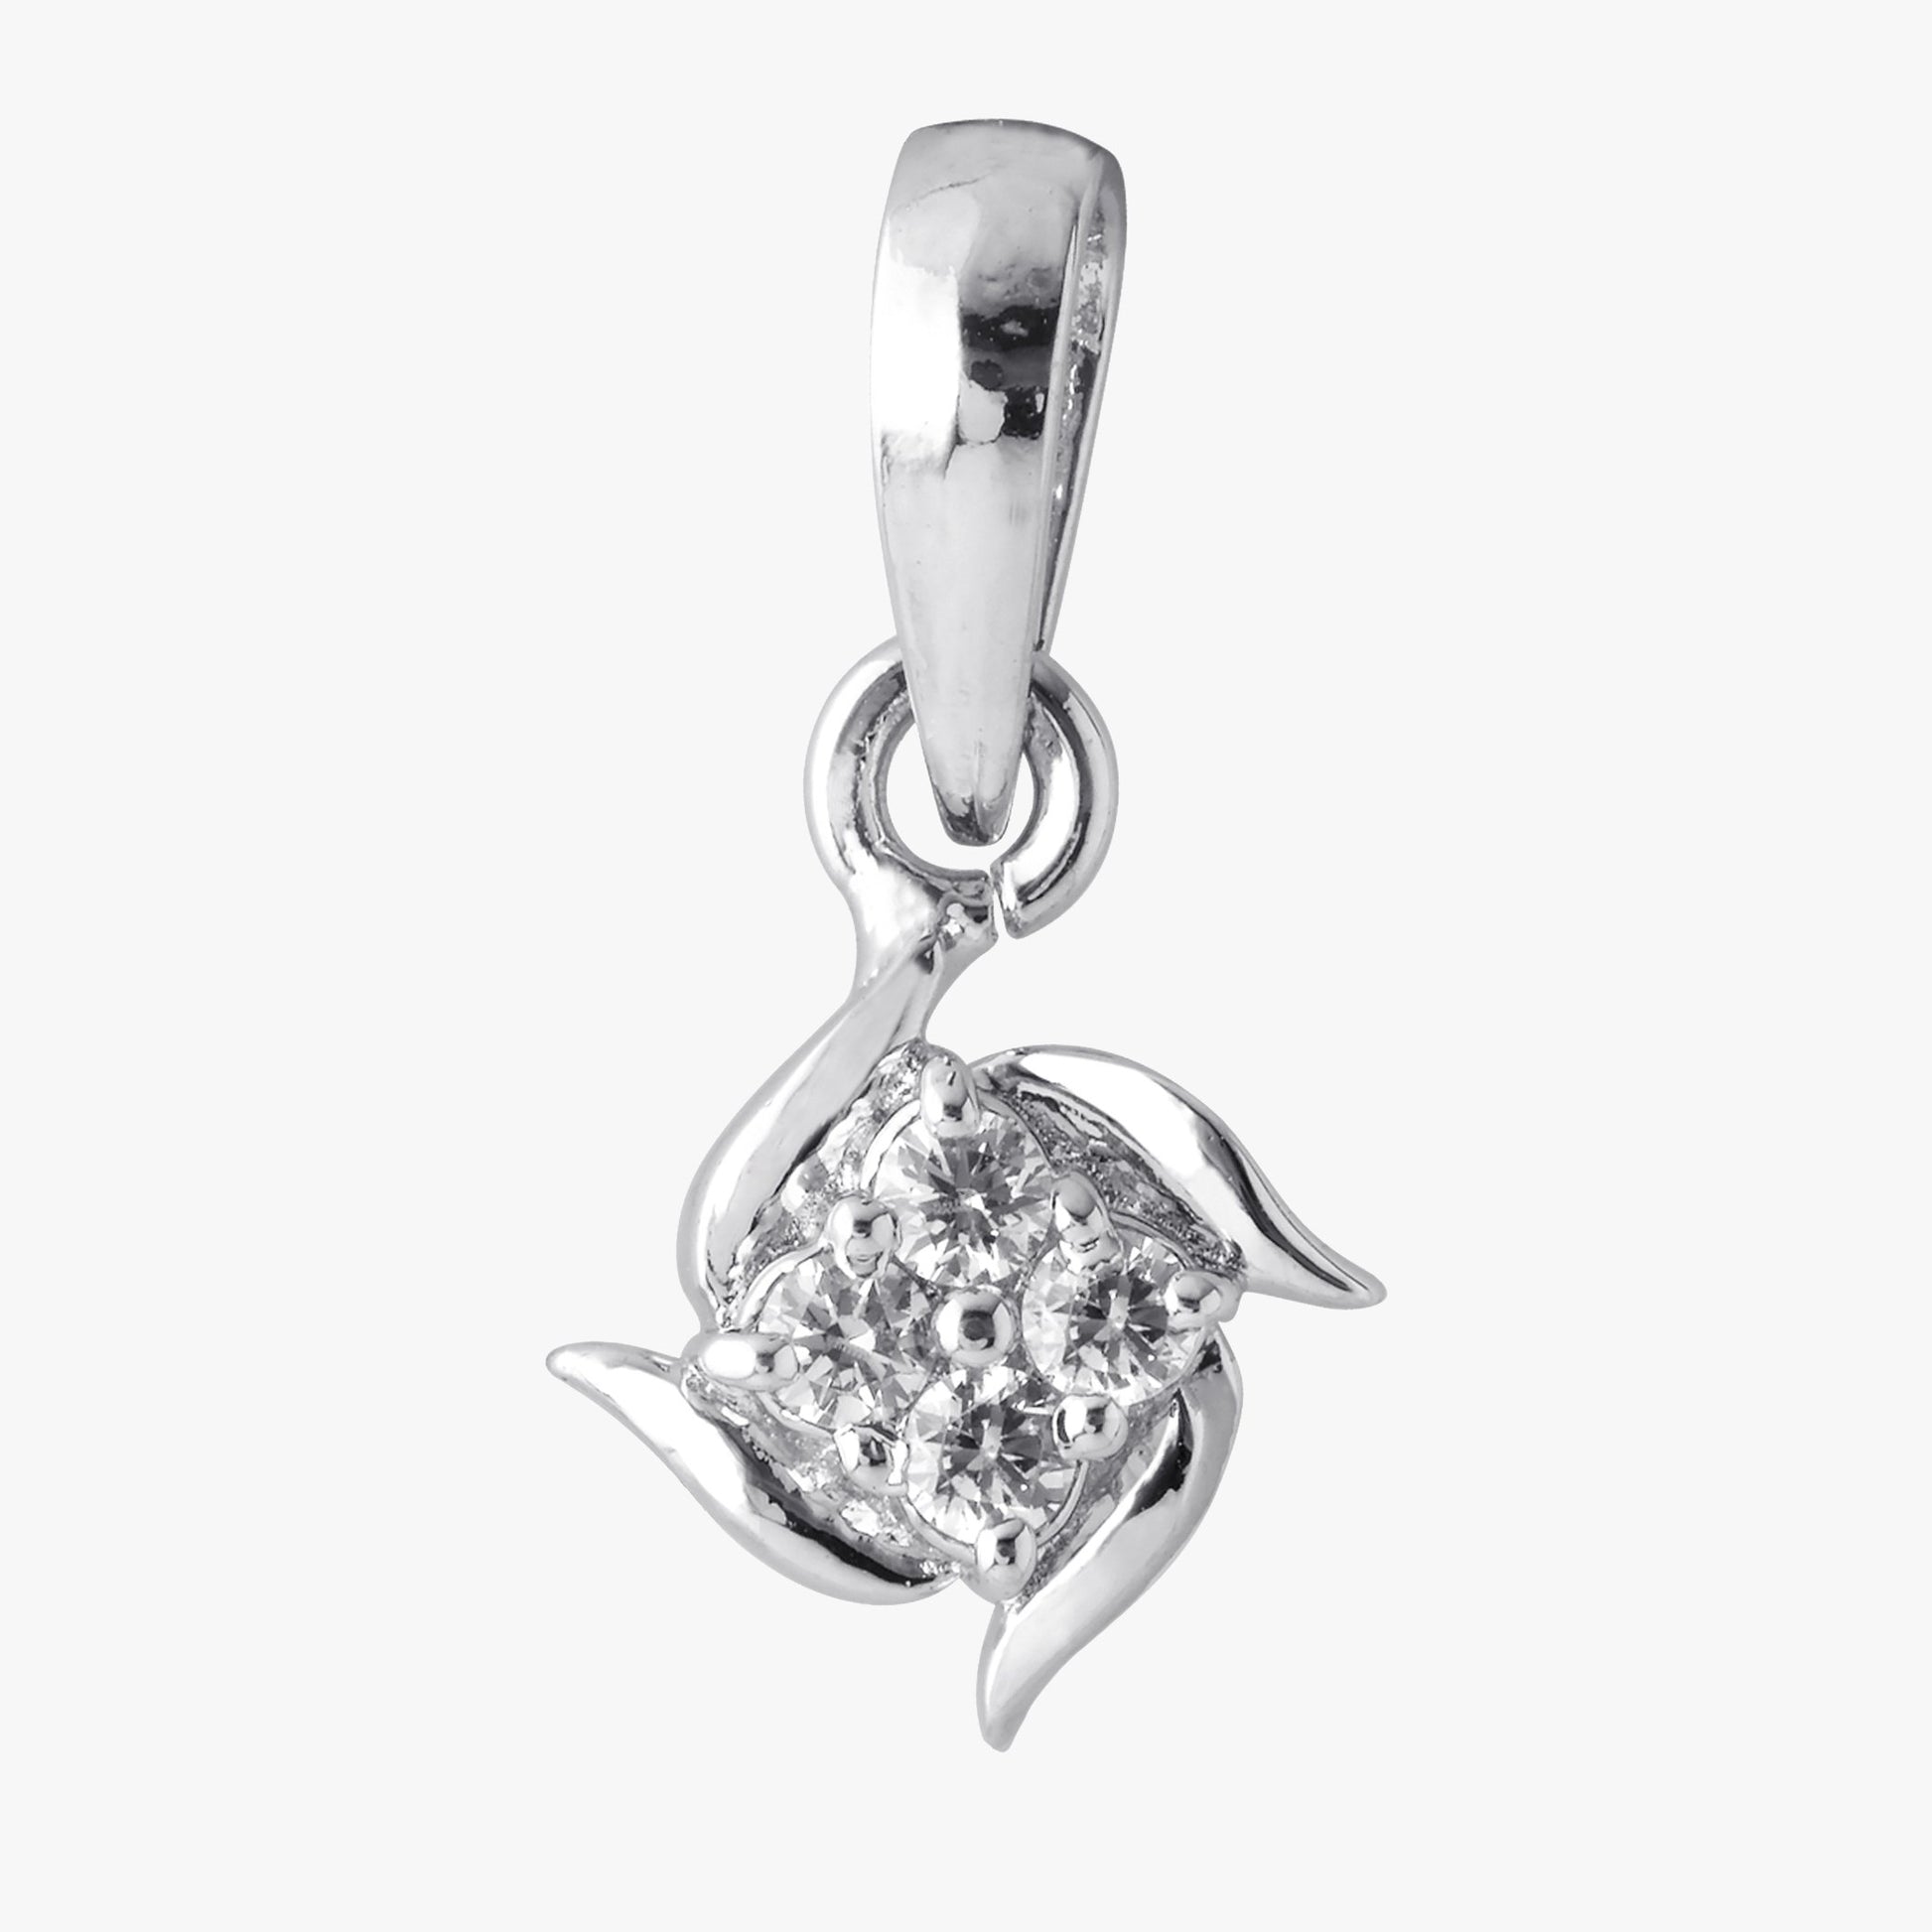 Silver pendant for girl